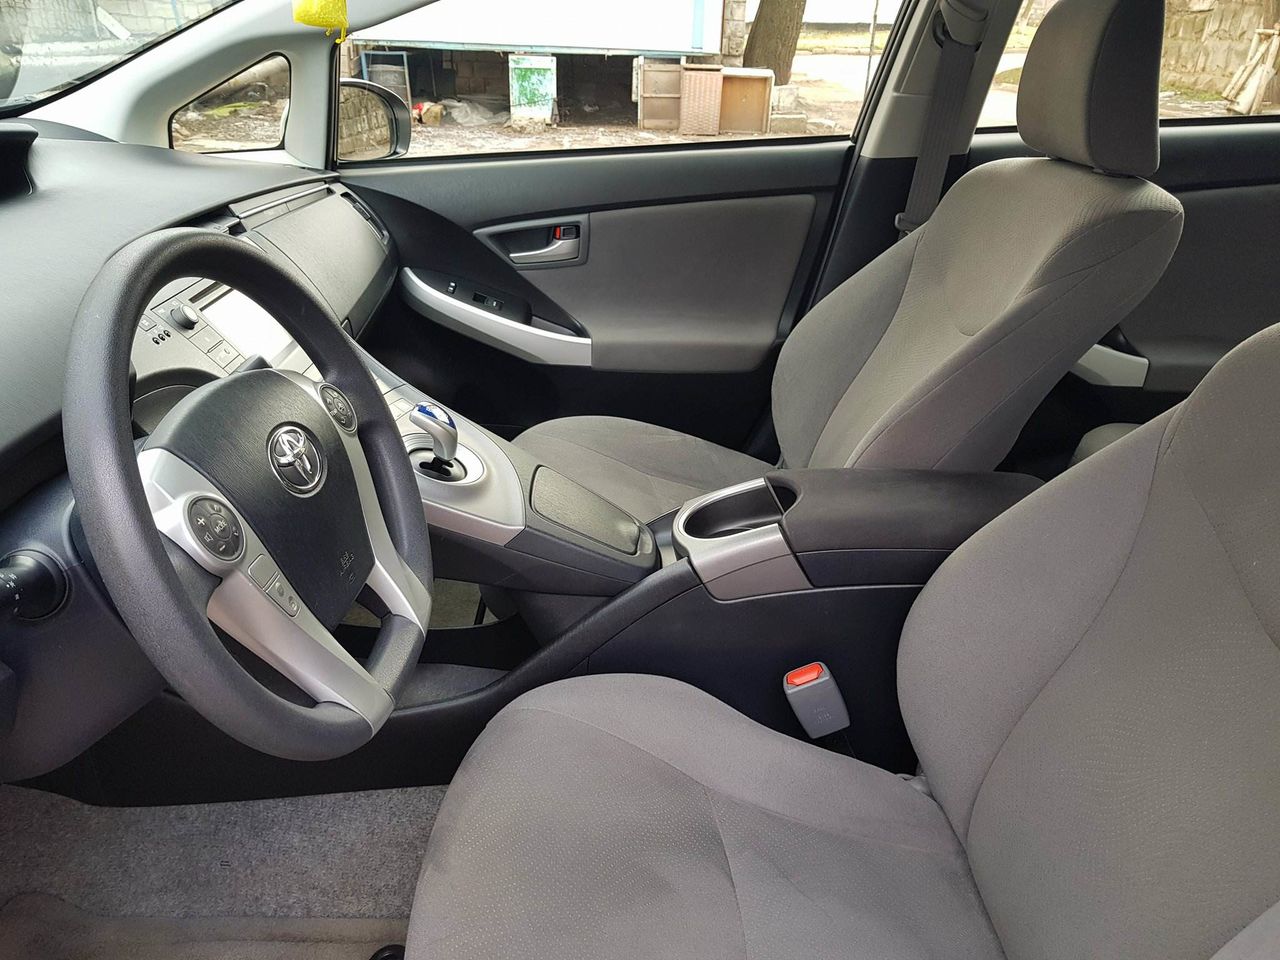 Toyota Prius -Masini la Procat Chisinău Ieftine3